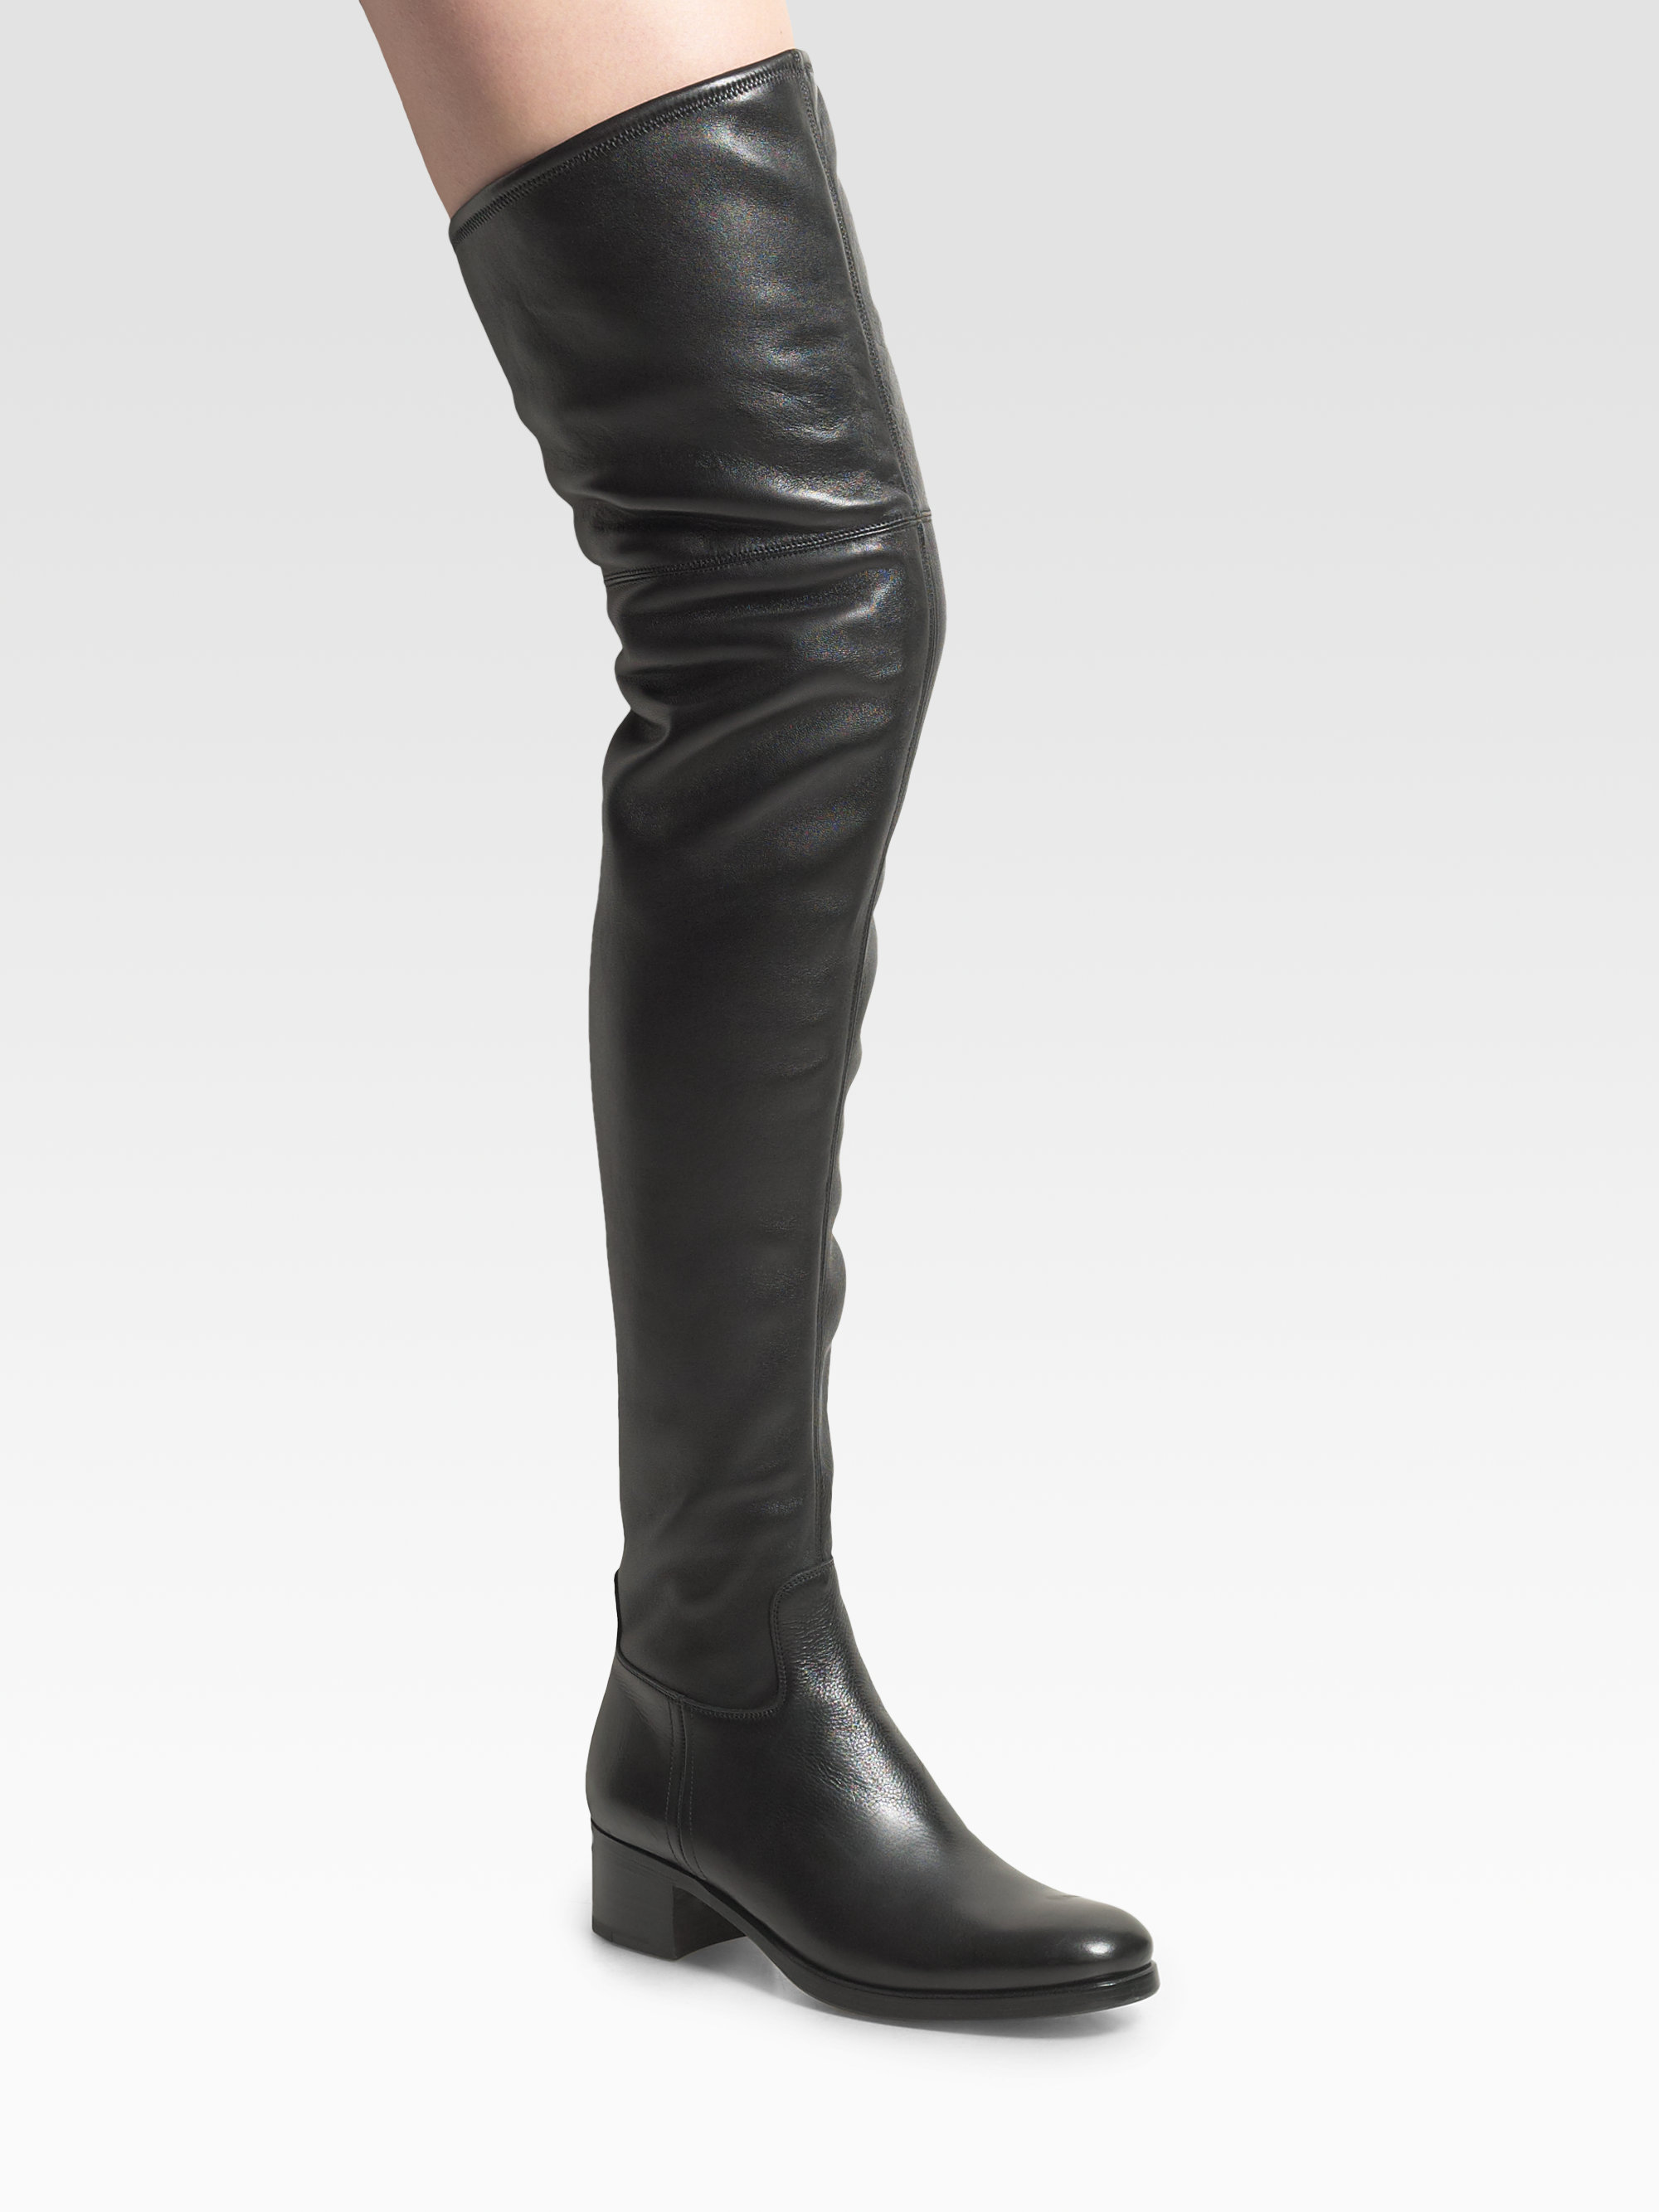 Prada Thigh High Boots in Black - Lyst